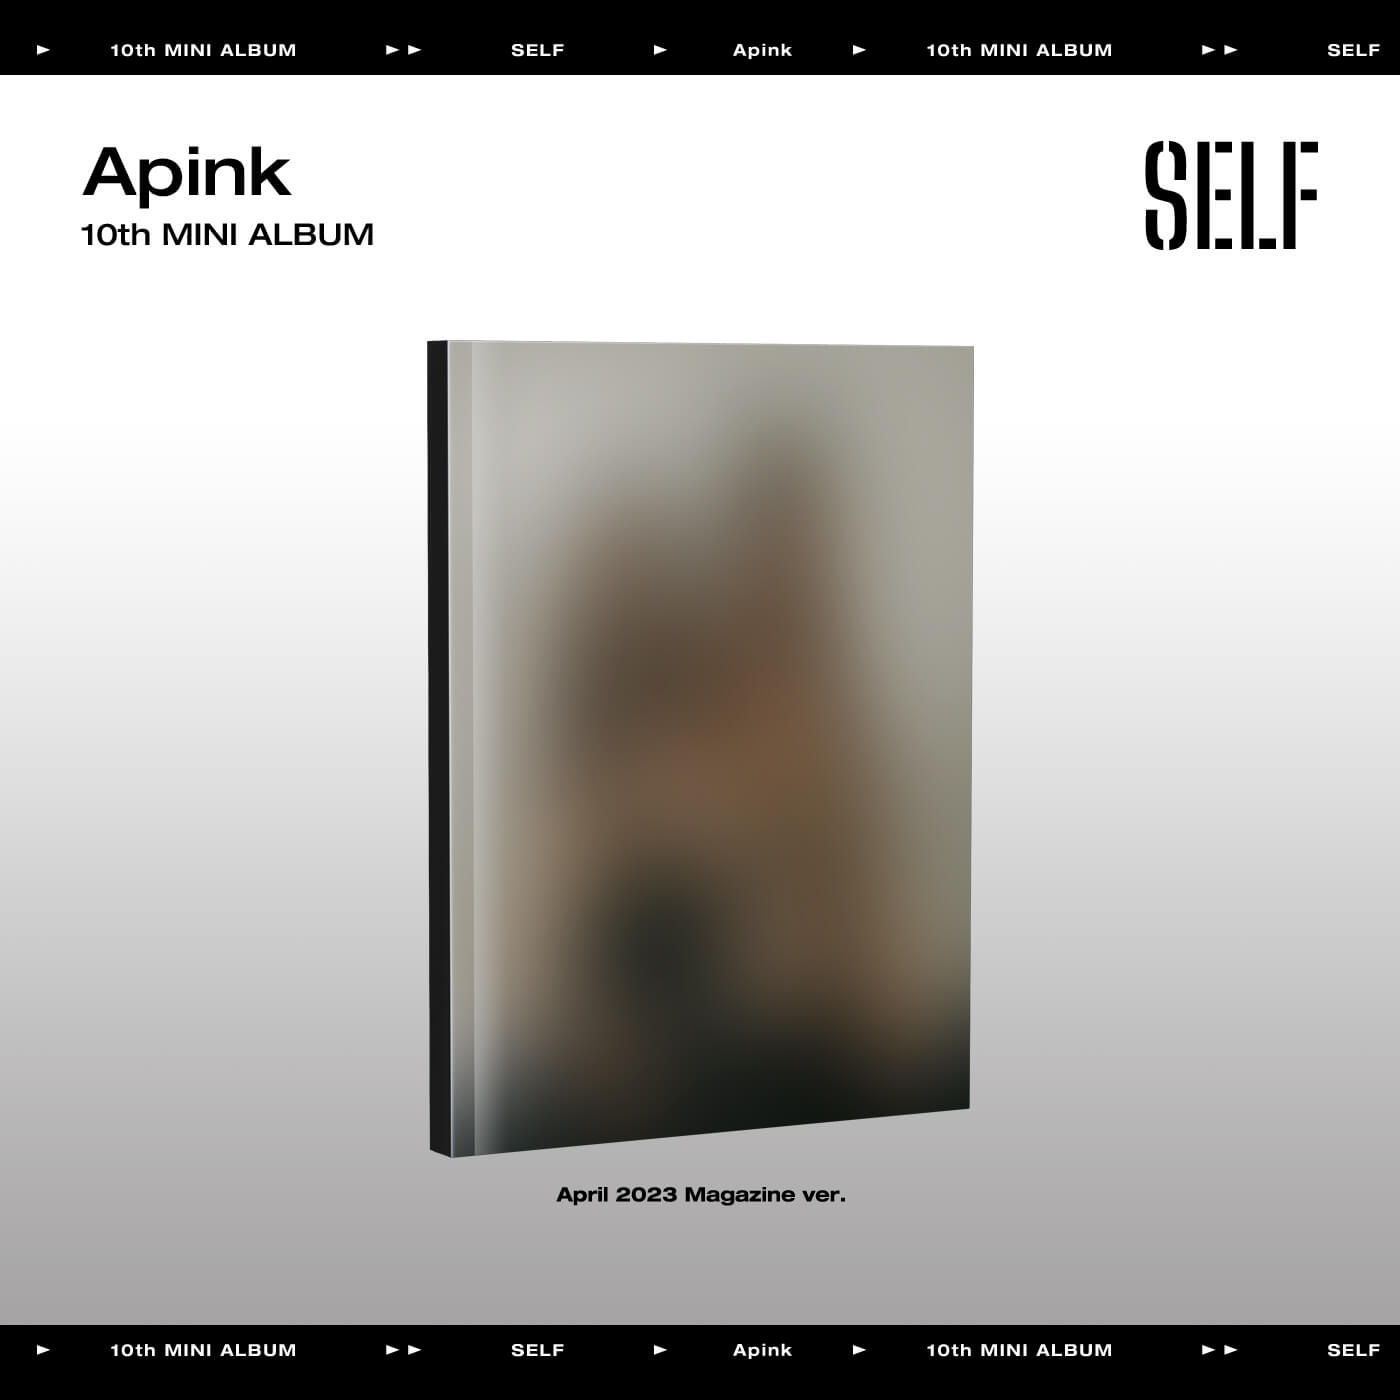 Apink 10th Mini Album SELF - April 2023 Magazine Version